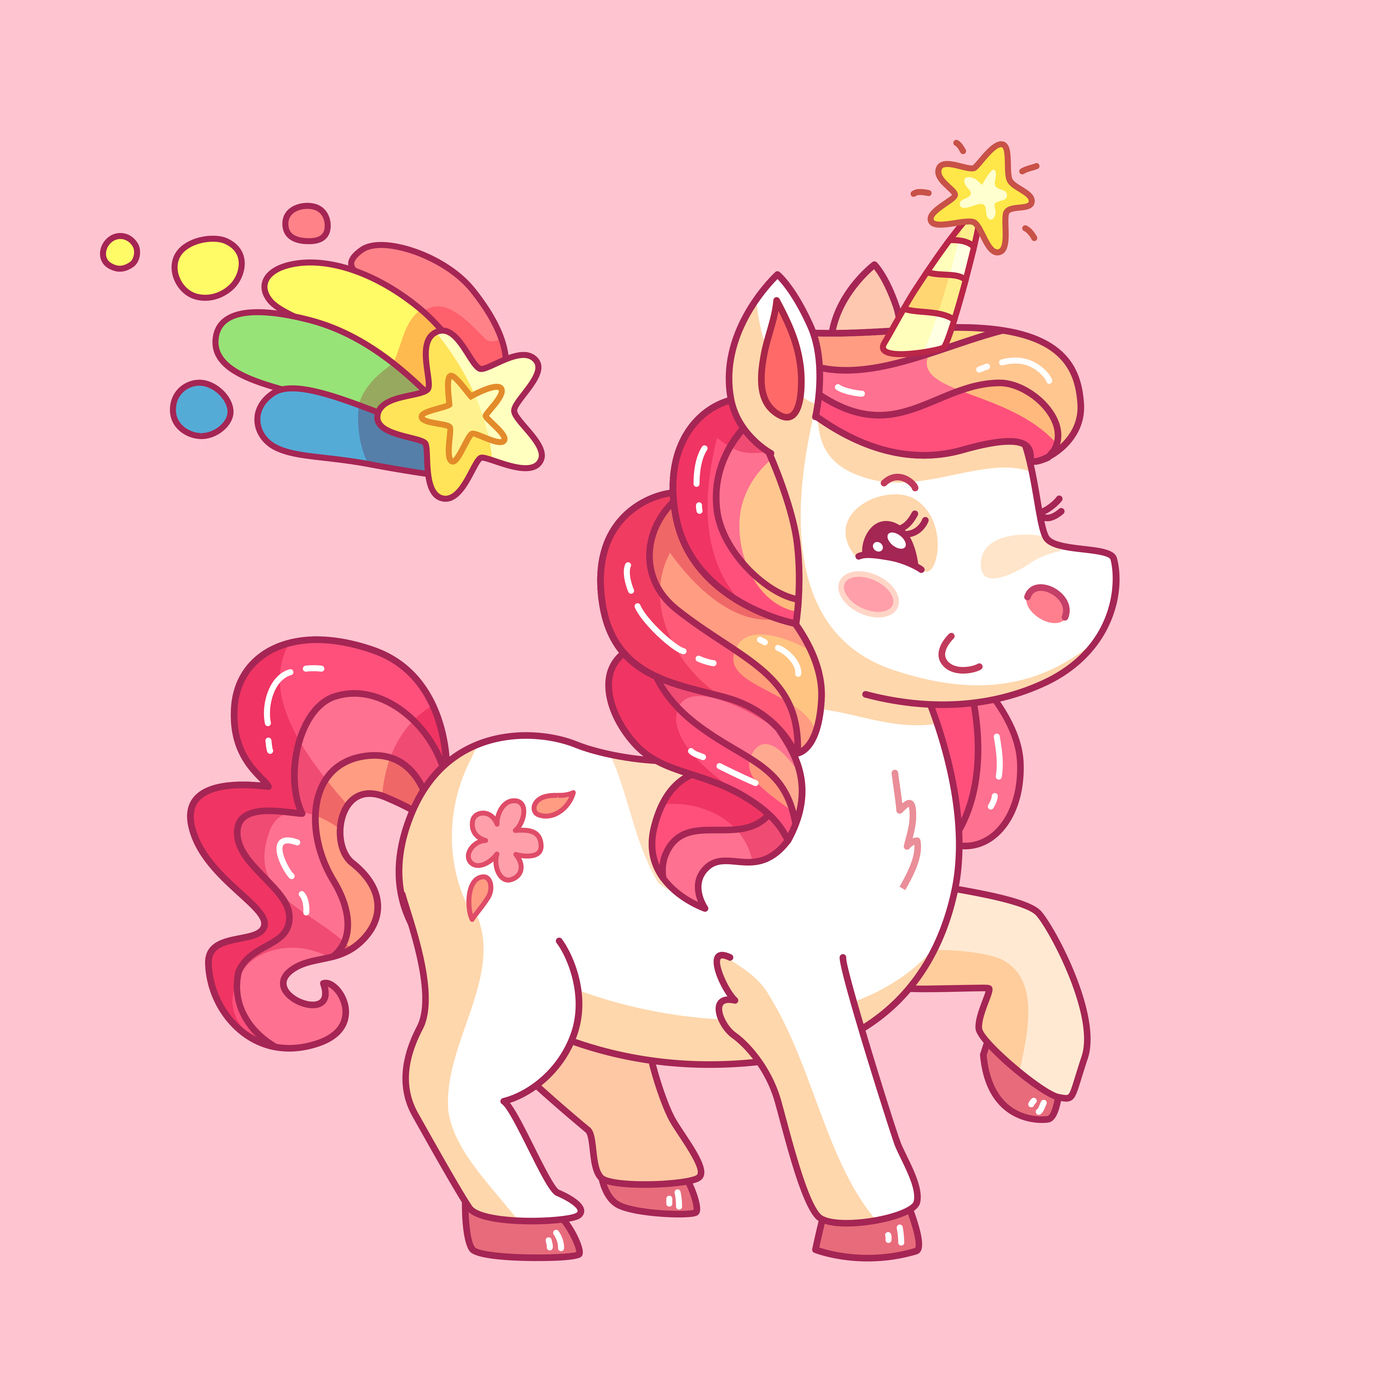 cute pink pony cartoon